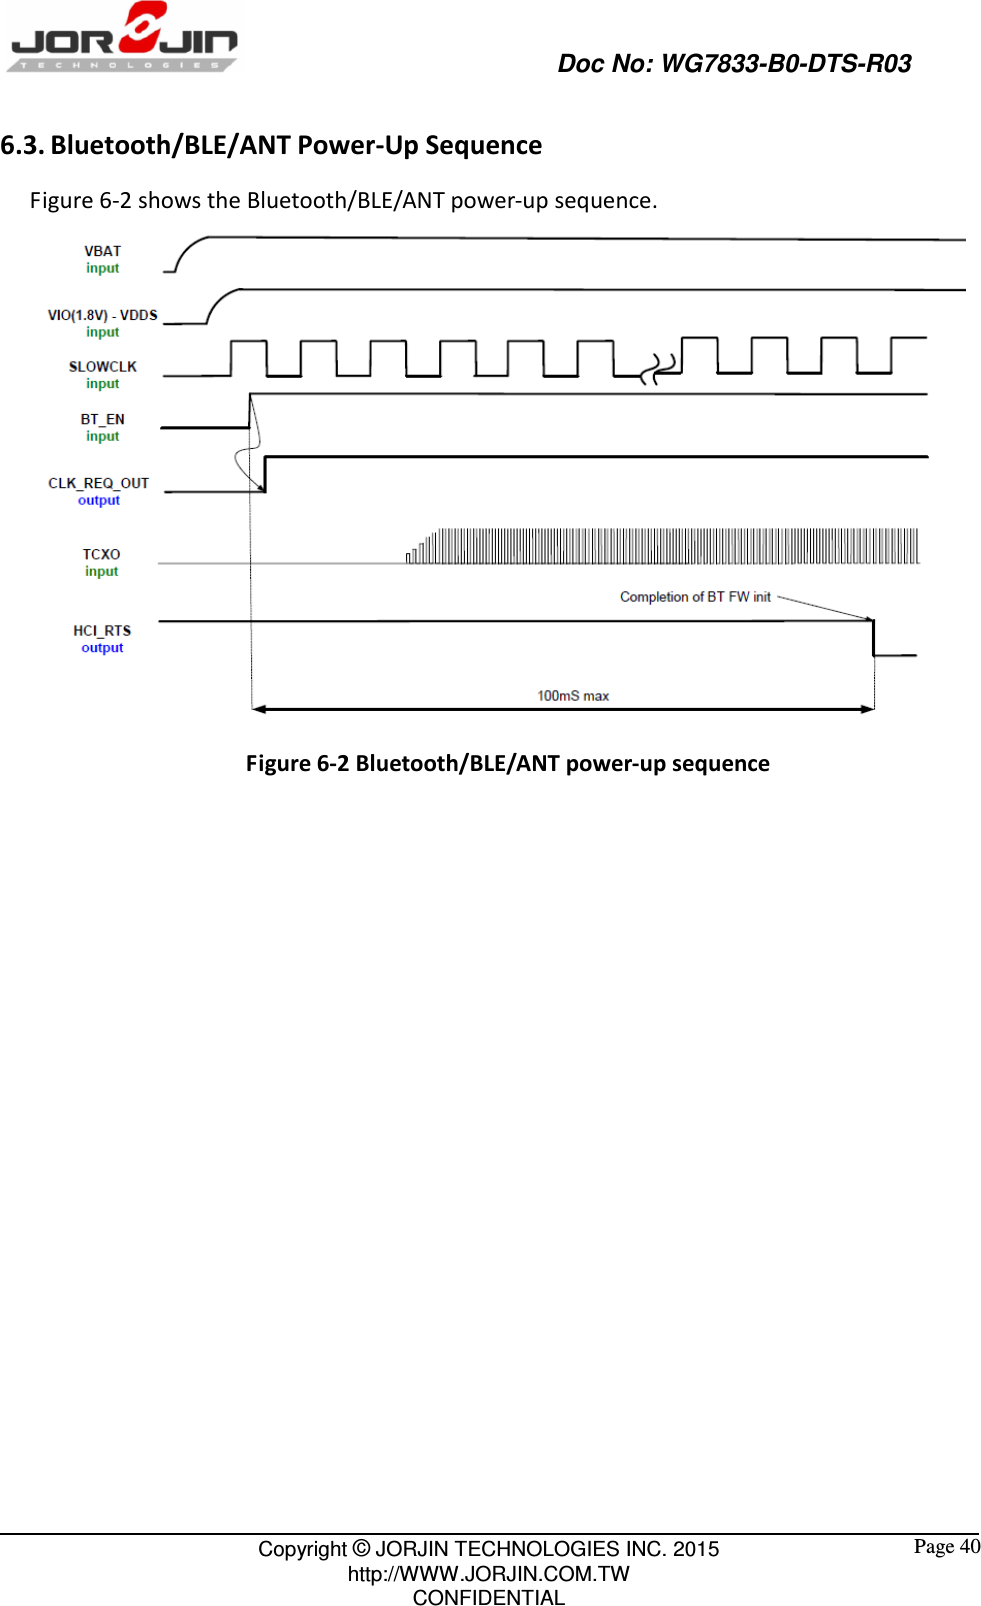                                                   Doc No: WG7833-B0-DTS-R03                                                                                                 Copyright © JORJIN TECHNOLOGIES INC. 2015 http://WWW.JORJIN.COM.TW CONFIDENTIAL  Page 40 6.3. Bluetooth/BLE/ANT Power-Up Sequence Figure 6-2 shows the Bluetooth/BLE/ANT power-up sequence.  Figure 6-2 Bluetooth/BLE/ANT power-up sequence   